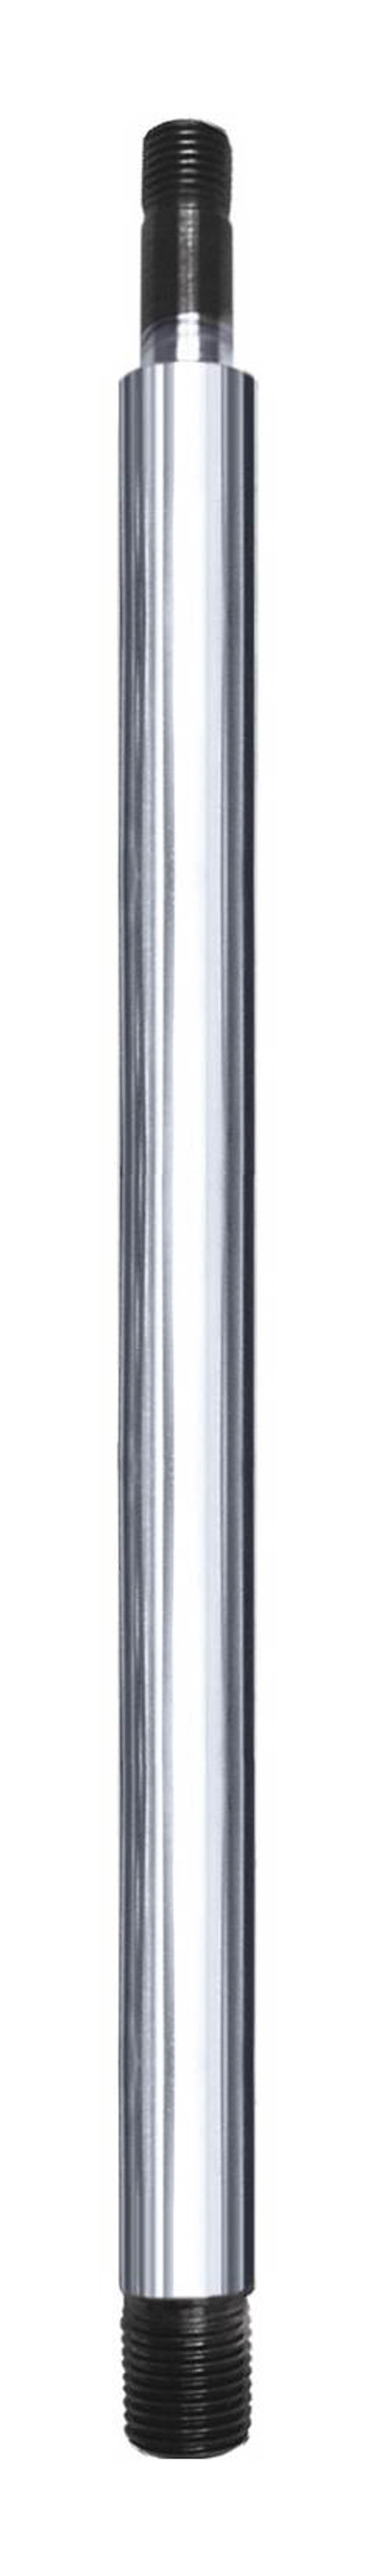 Large Piston Rod - 9in